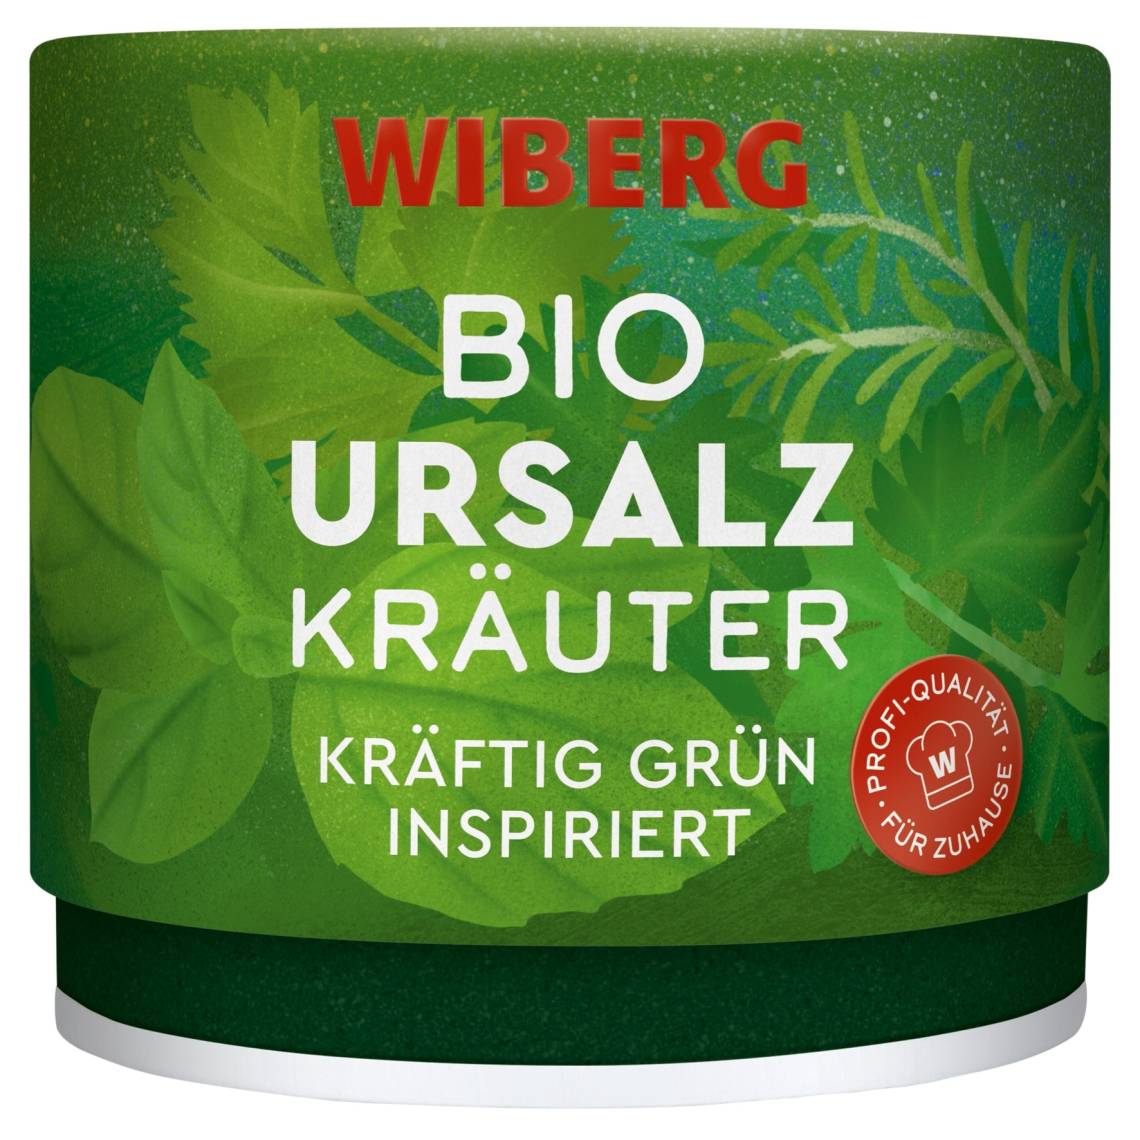 WIBERG BIO Ursalz Kräuter - kräftig grün inspiriert